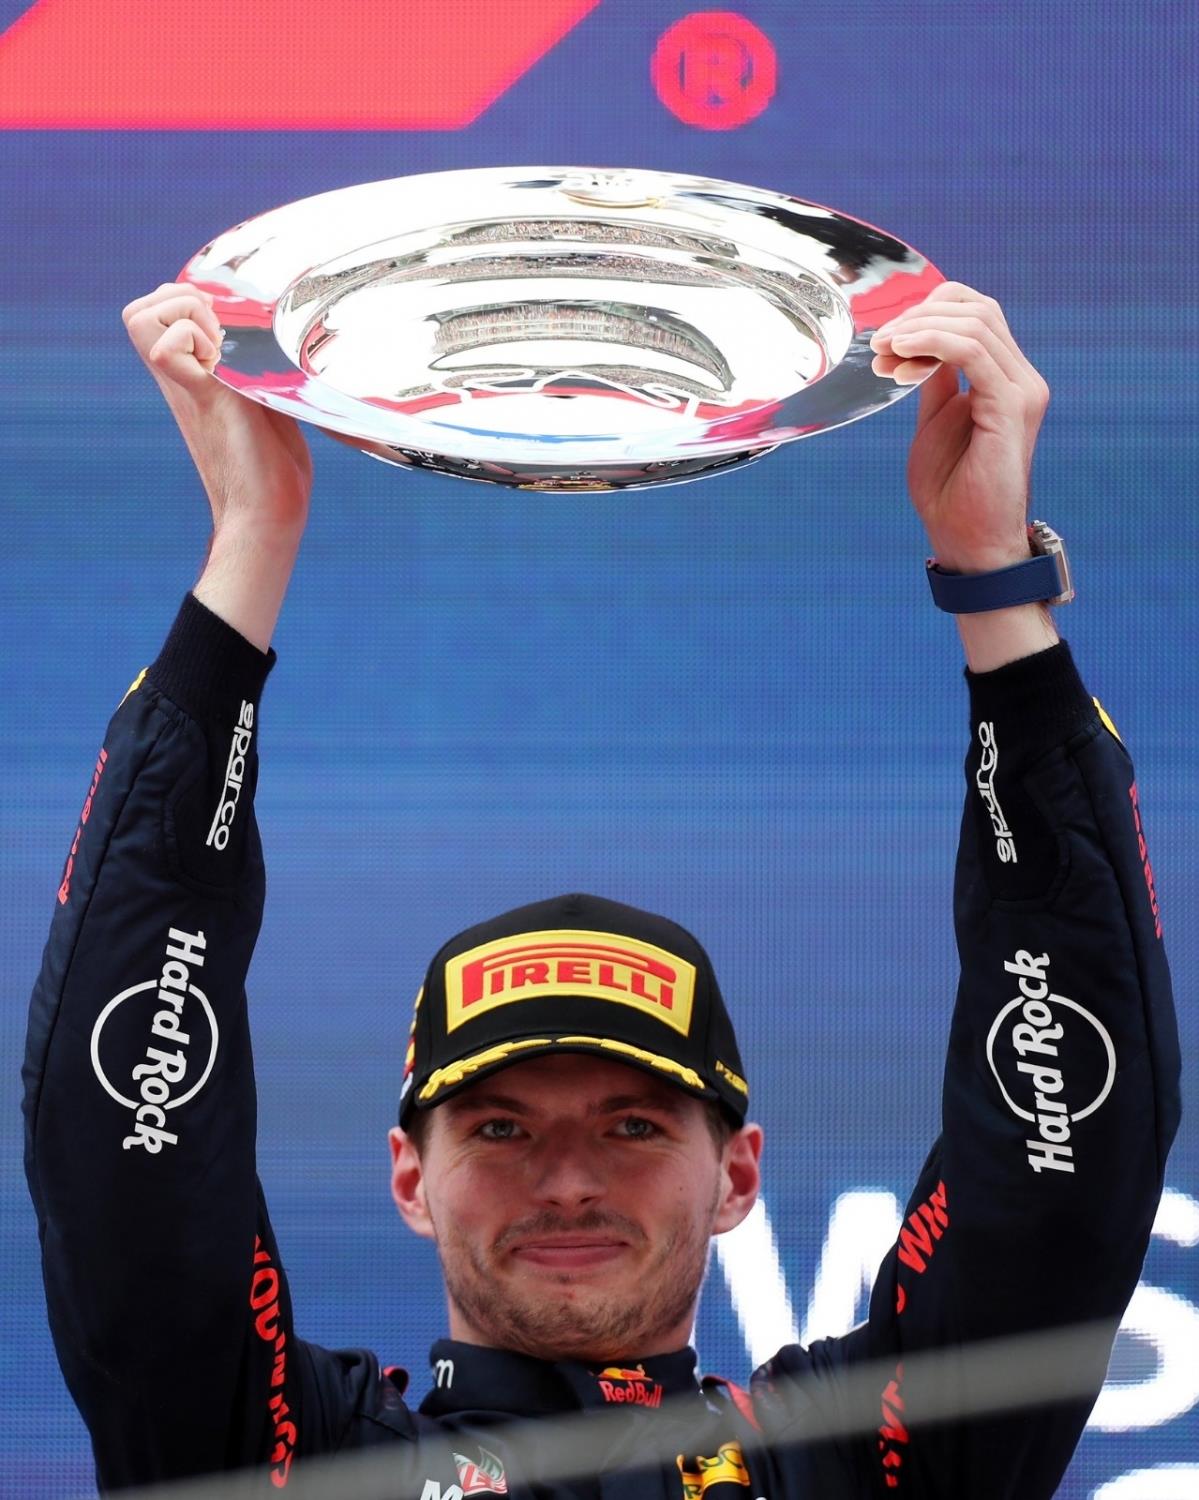  Formula 1: Verstappen Cruises To Spanish GP Win Ahead Of Hamilton, Extends Championship Lead 